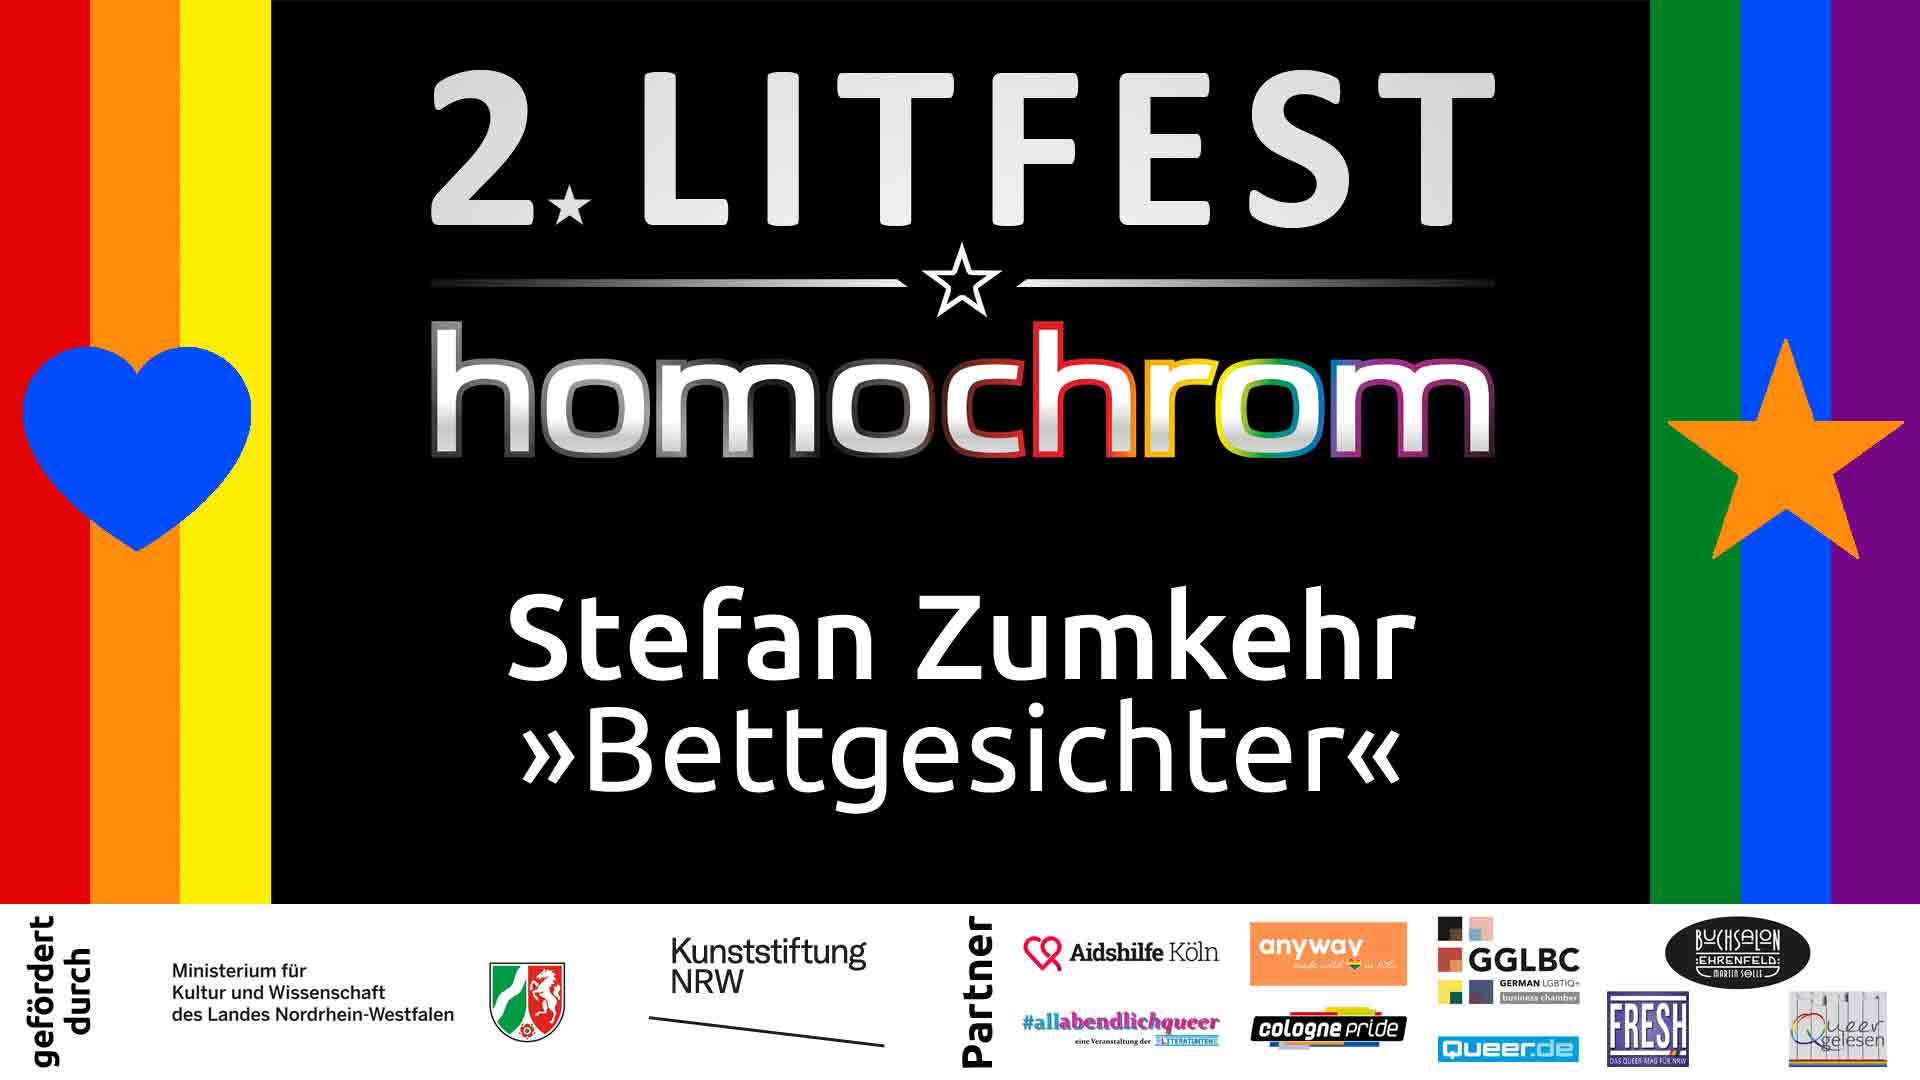 Youtube Video, Stefan Zumkehr, 2. Litfest homochrom